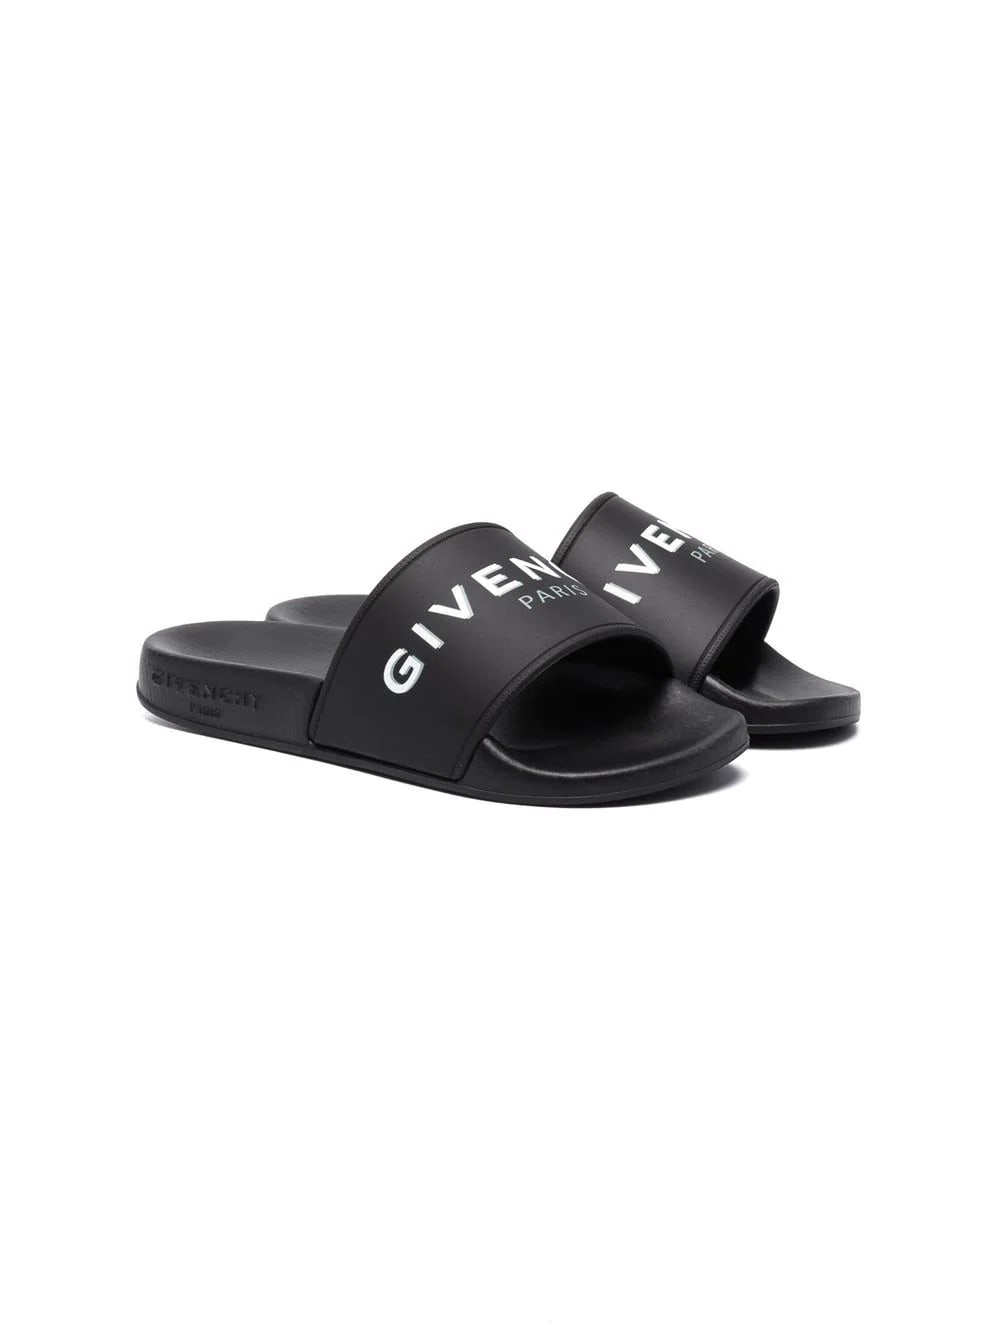 Givenchy Kids Black Slipper With White Logo